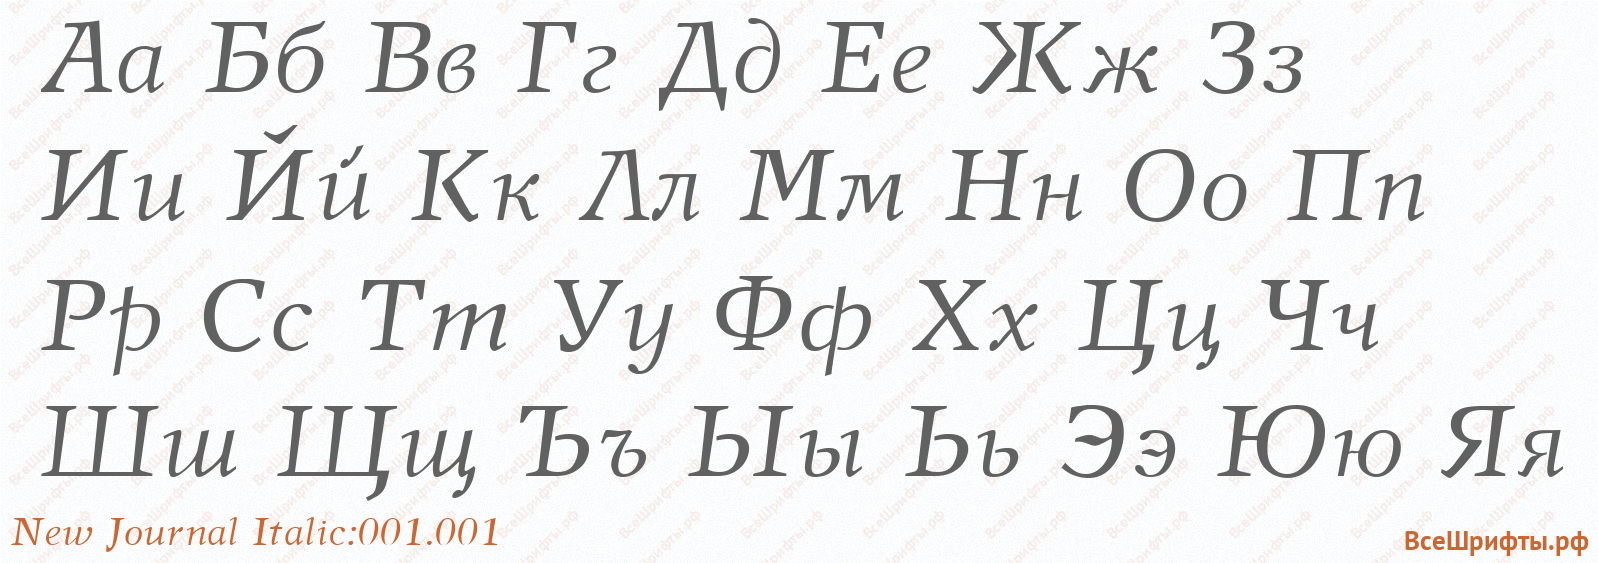 Шрифт New Journal Italic:001.001 с русскими буквами